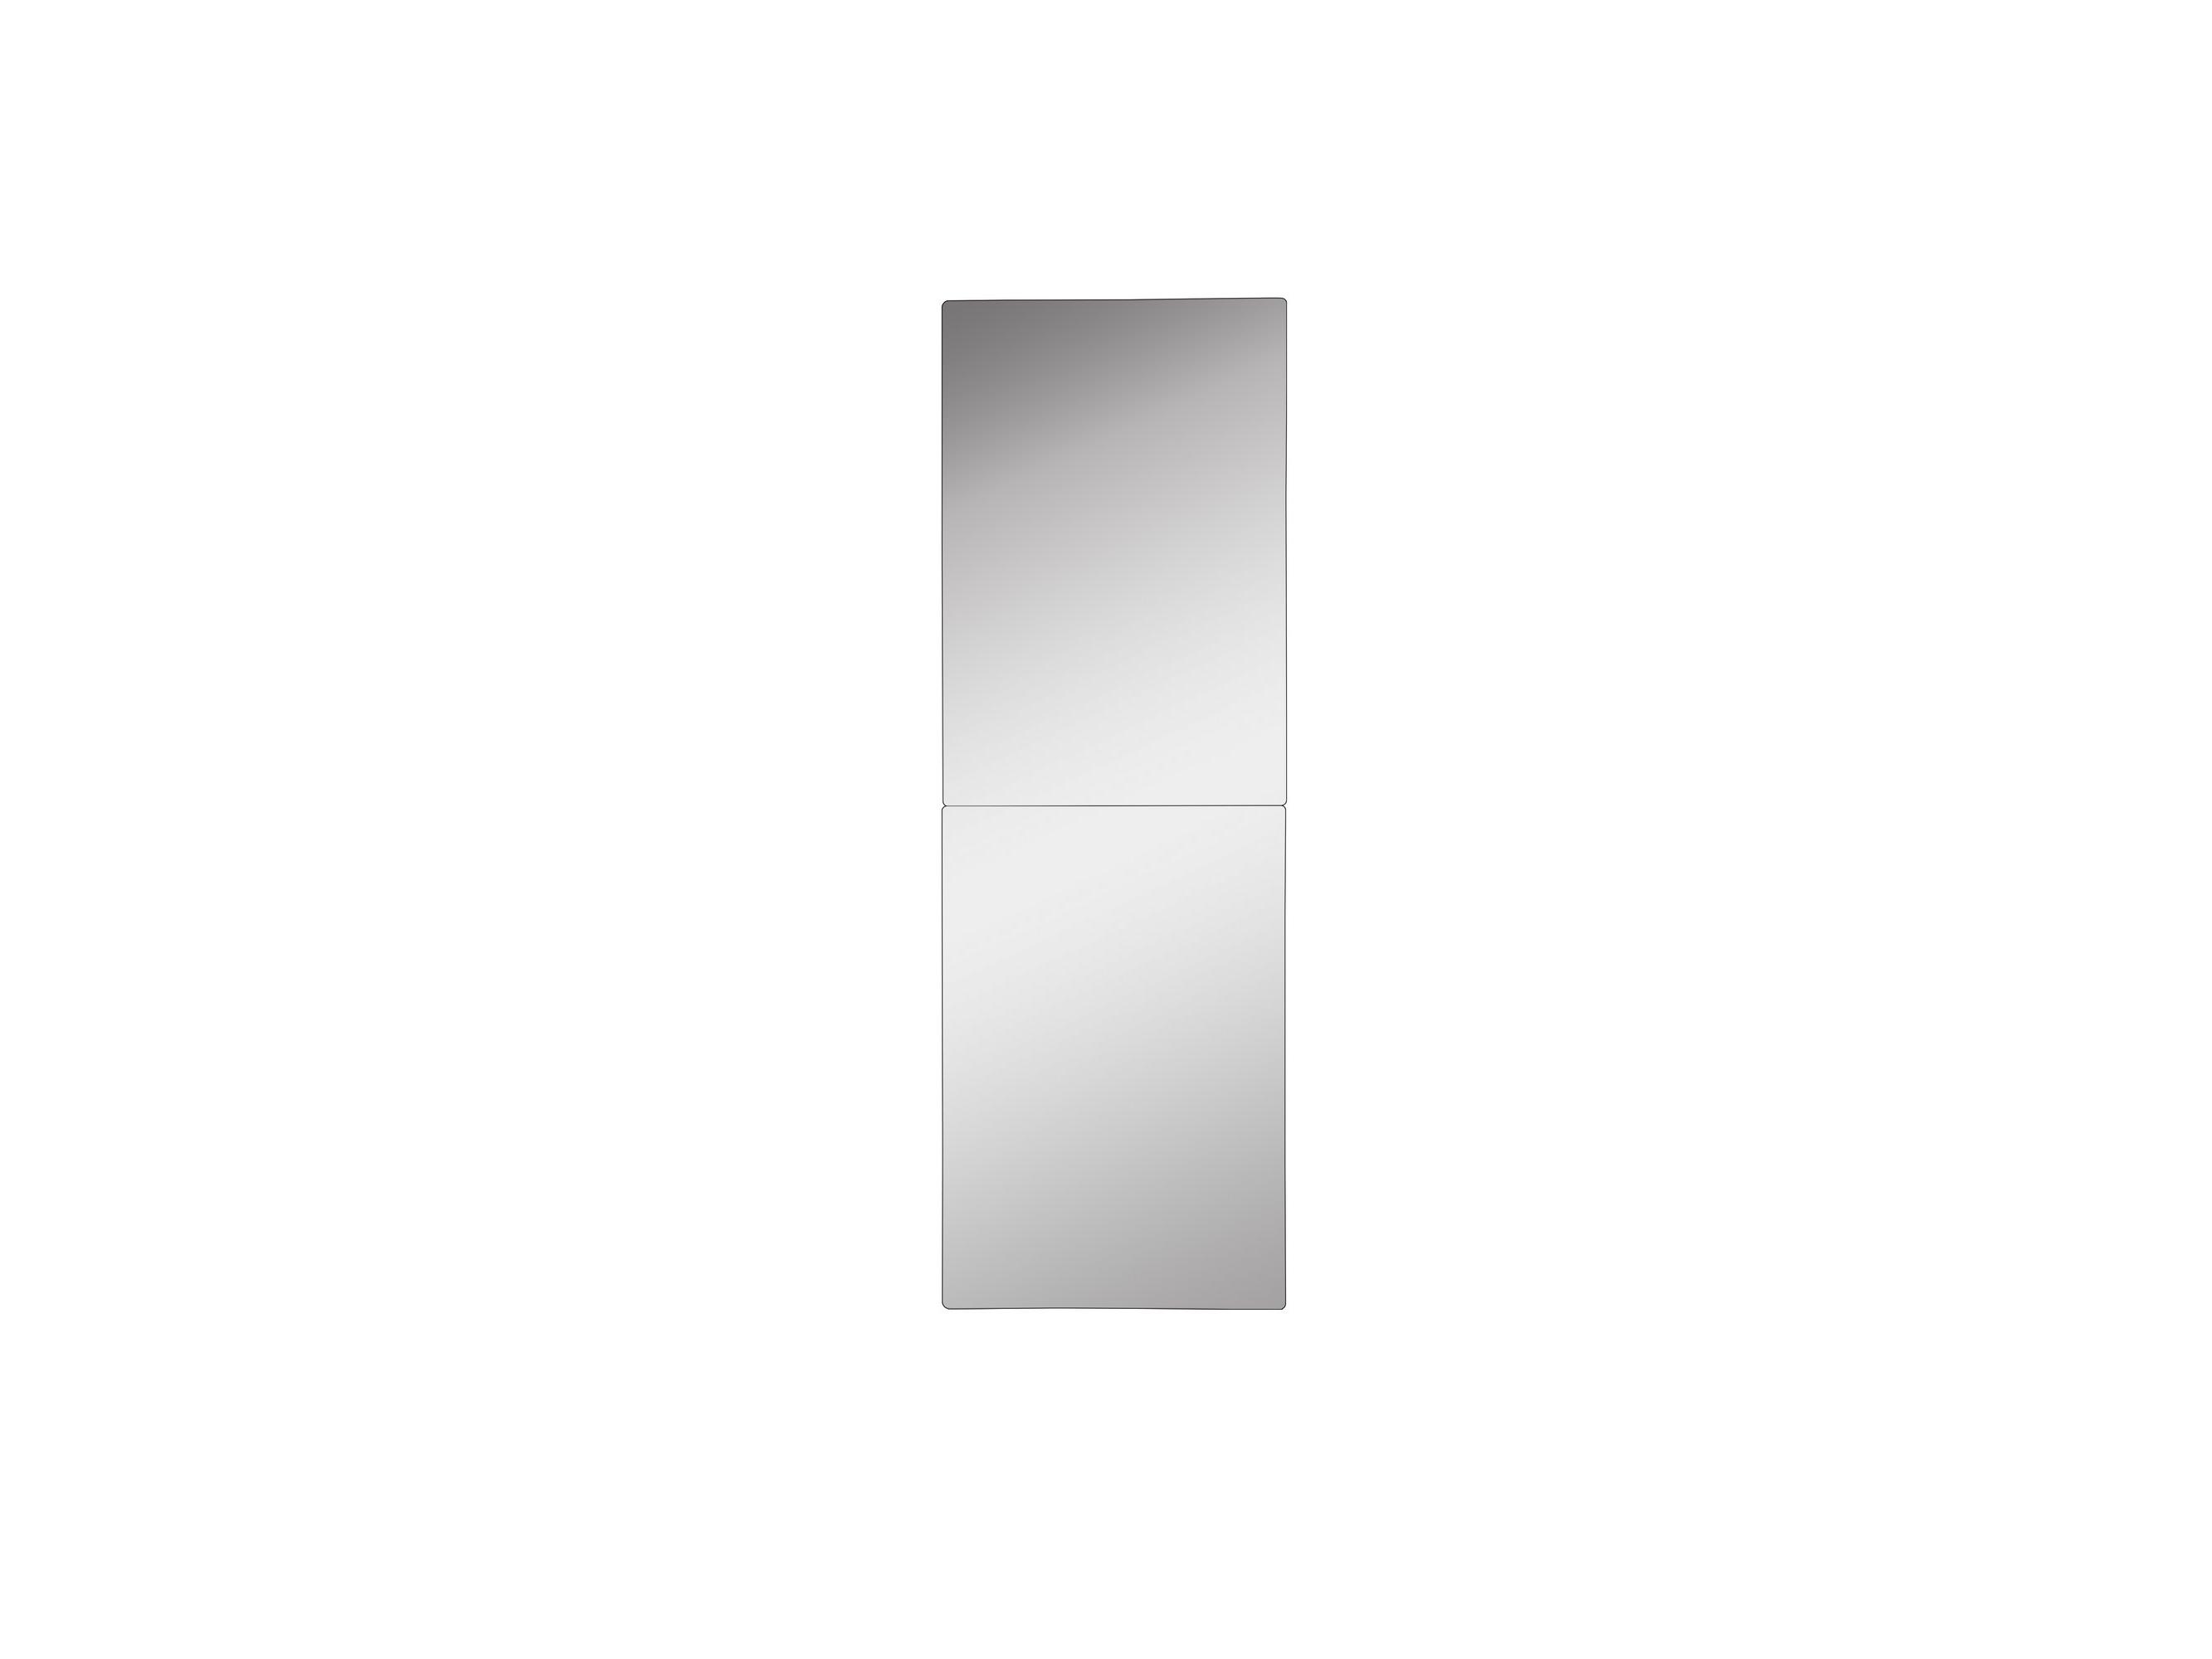  Zrcadlo Sivuko 2 (stříbrná)